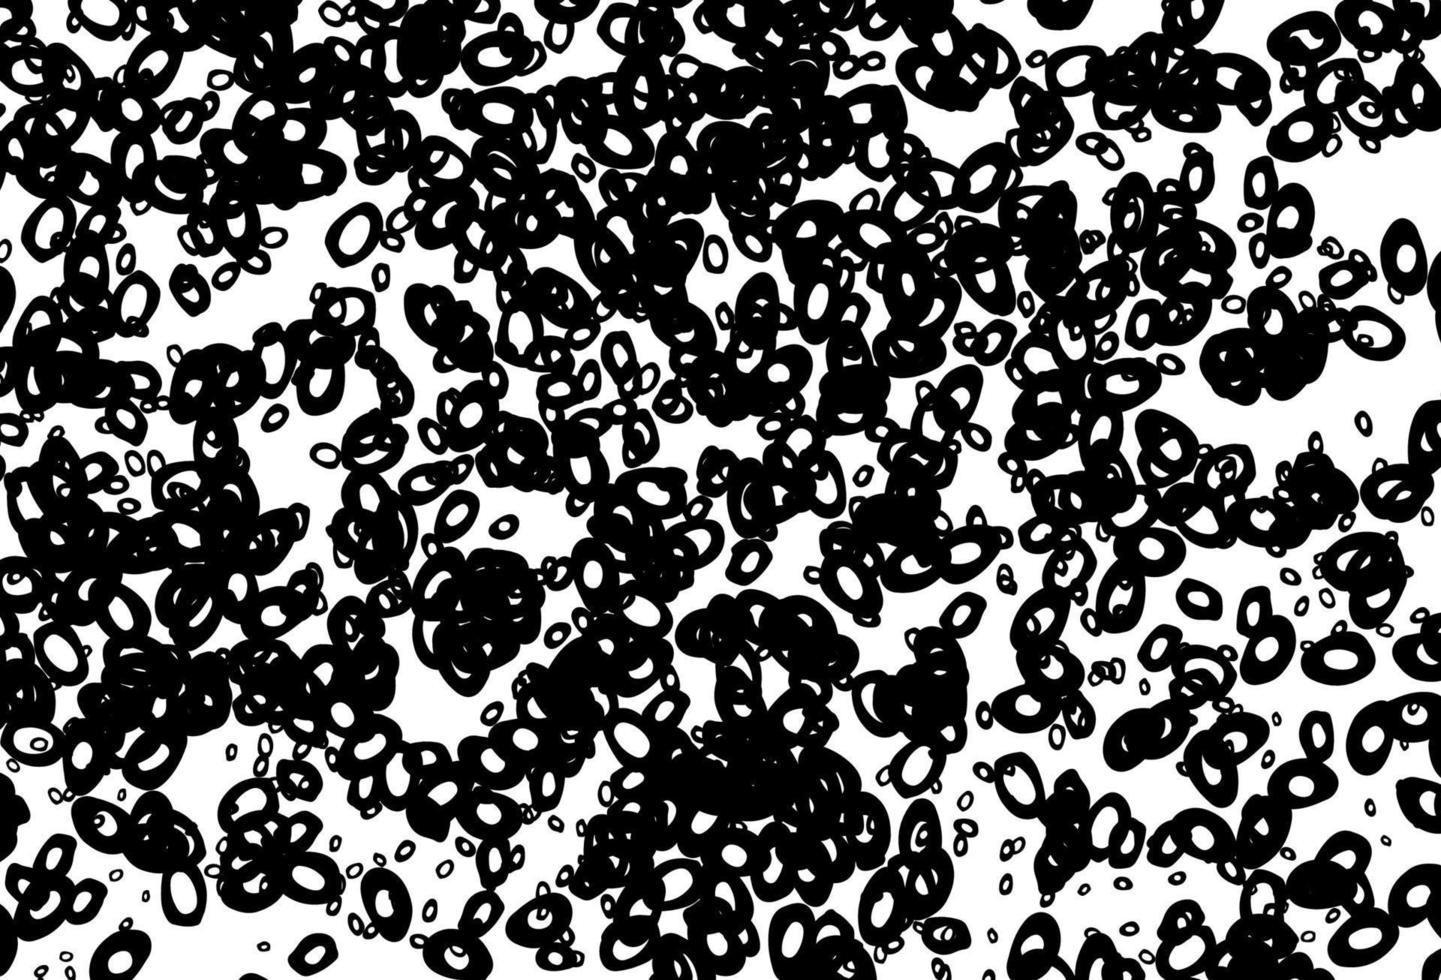 svartvitt vektorlayout med cirkelformer. vektor